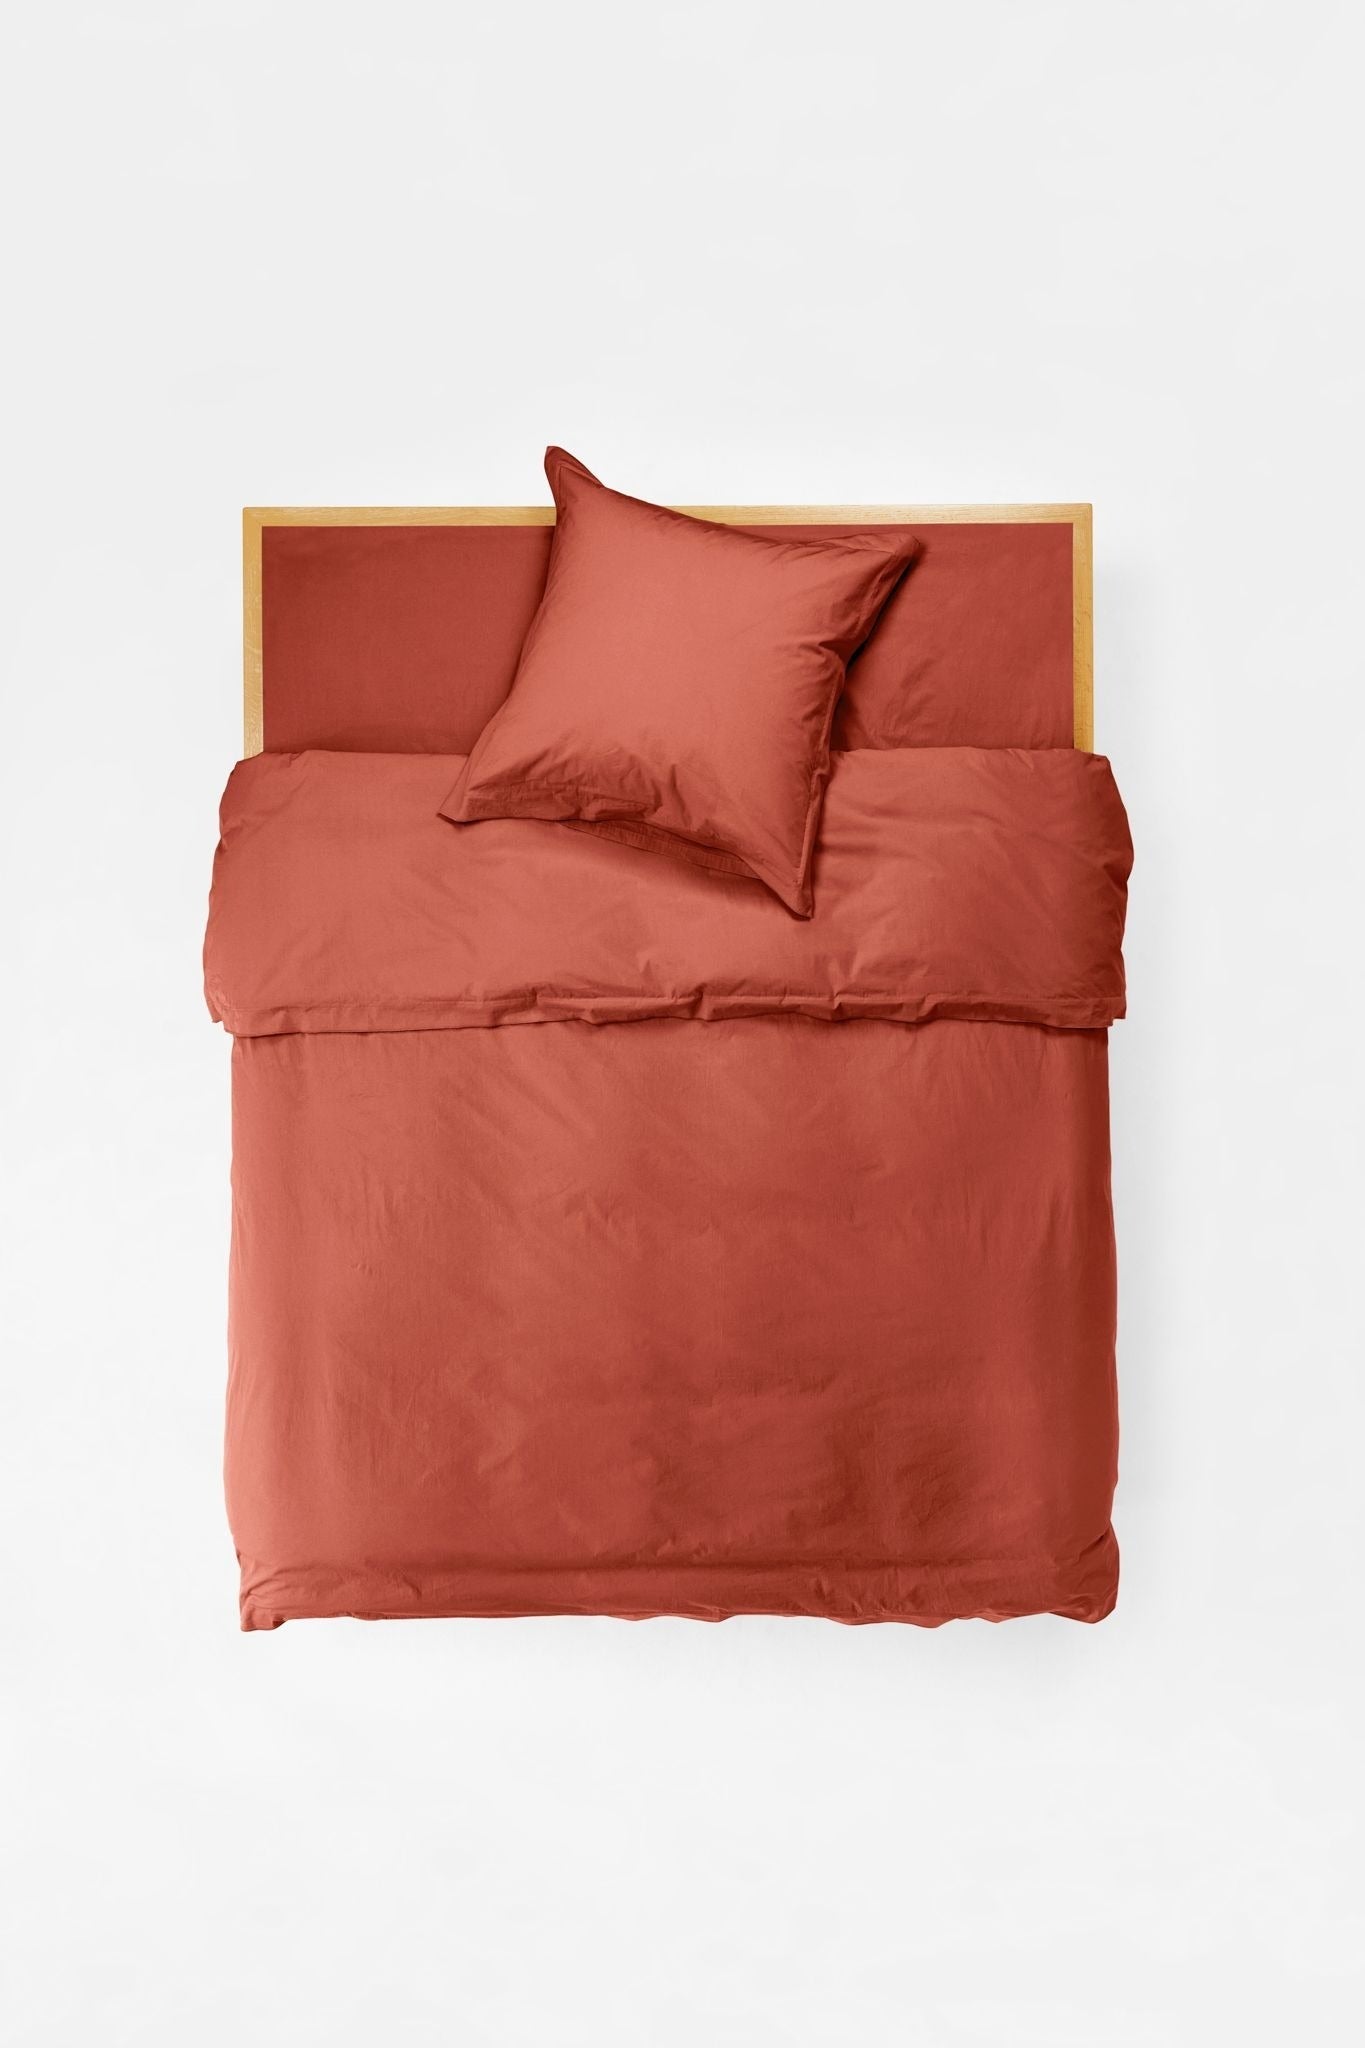 Mono Organic Cotton Percale Pillow Pair - Ochre Red Pillows in Euro Pillow